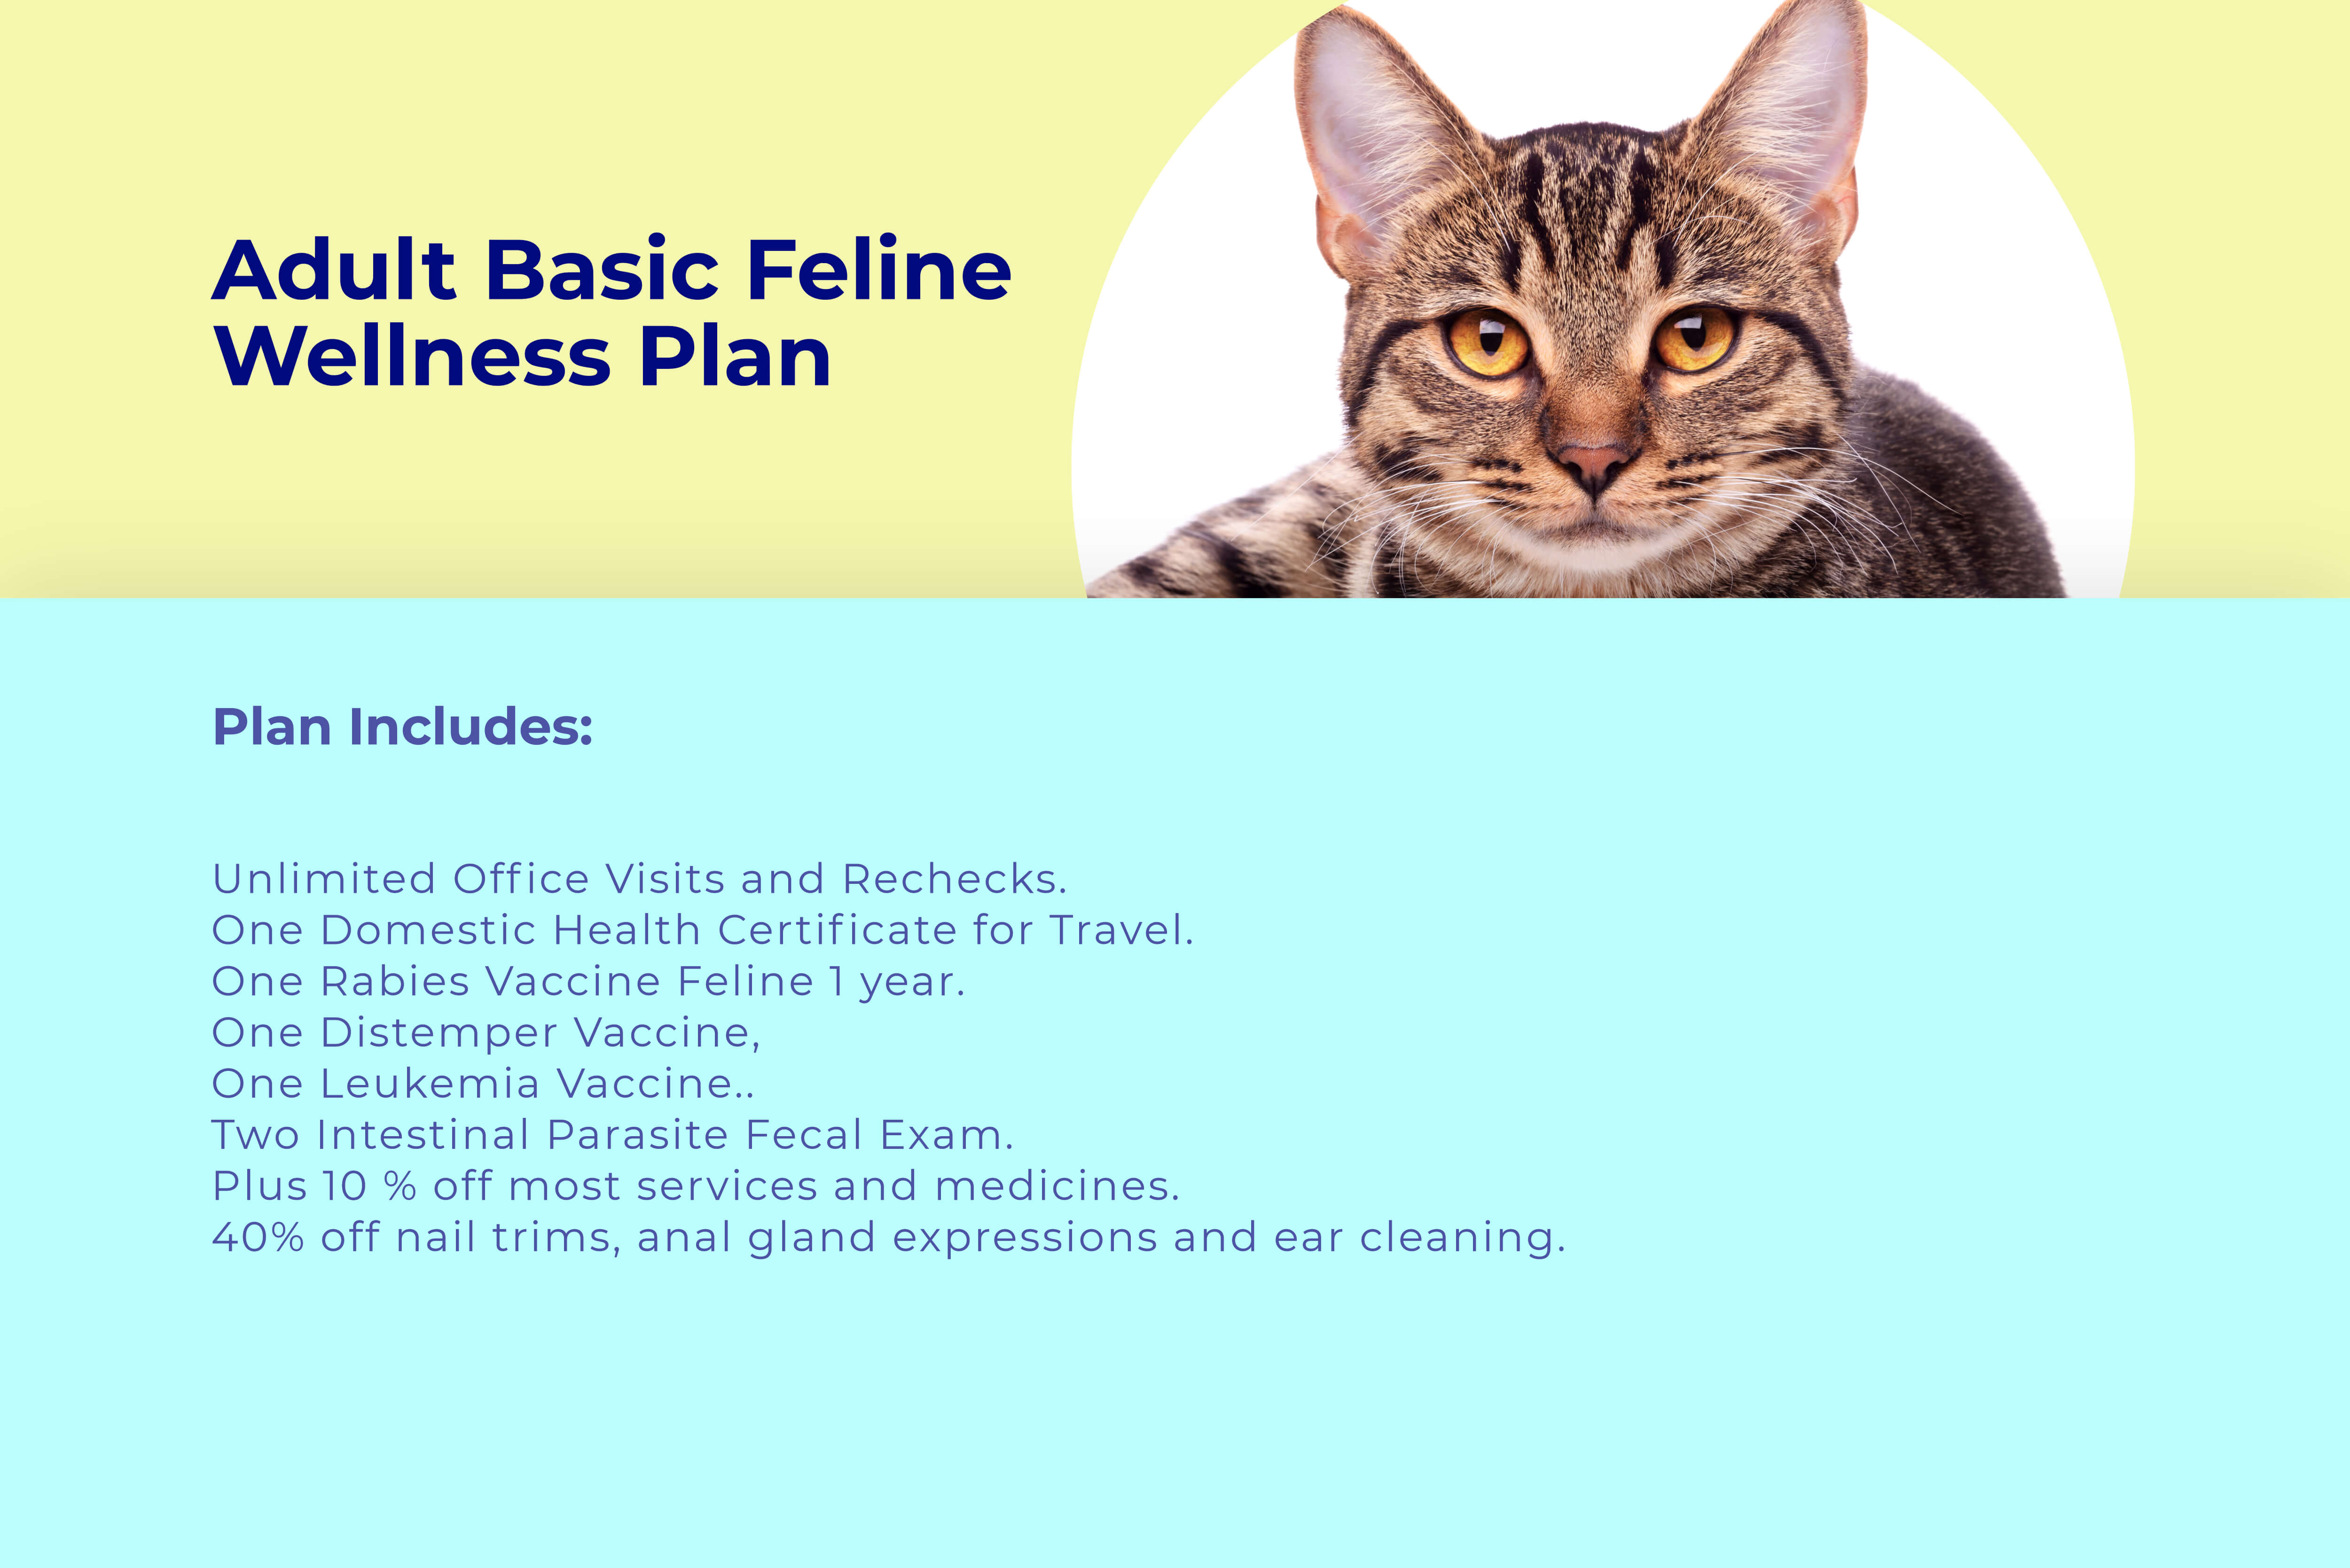 Adult cat basic wellness plan at animal wellness clinic